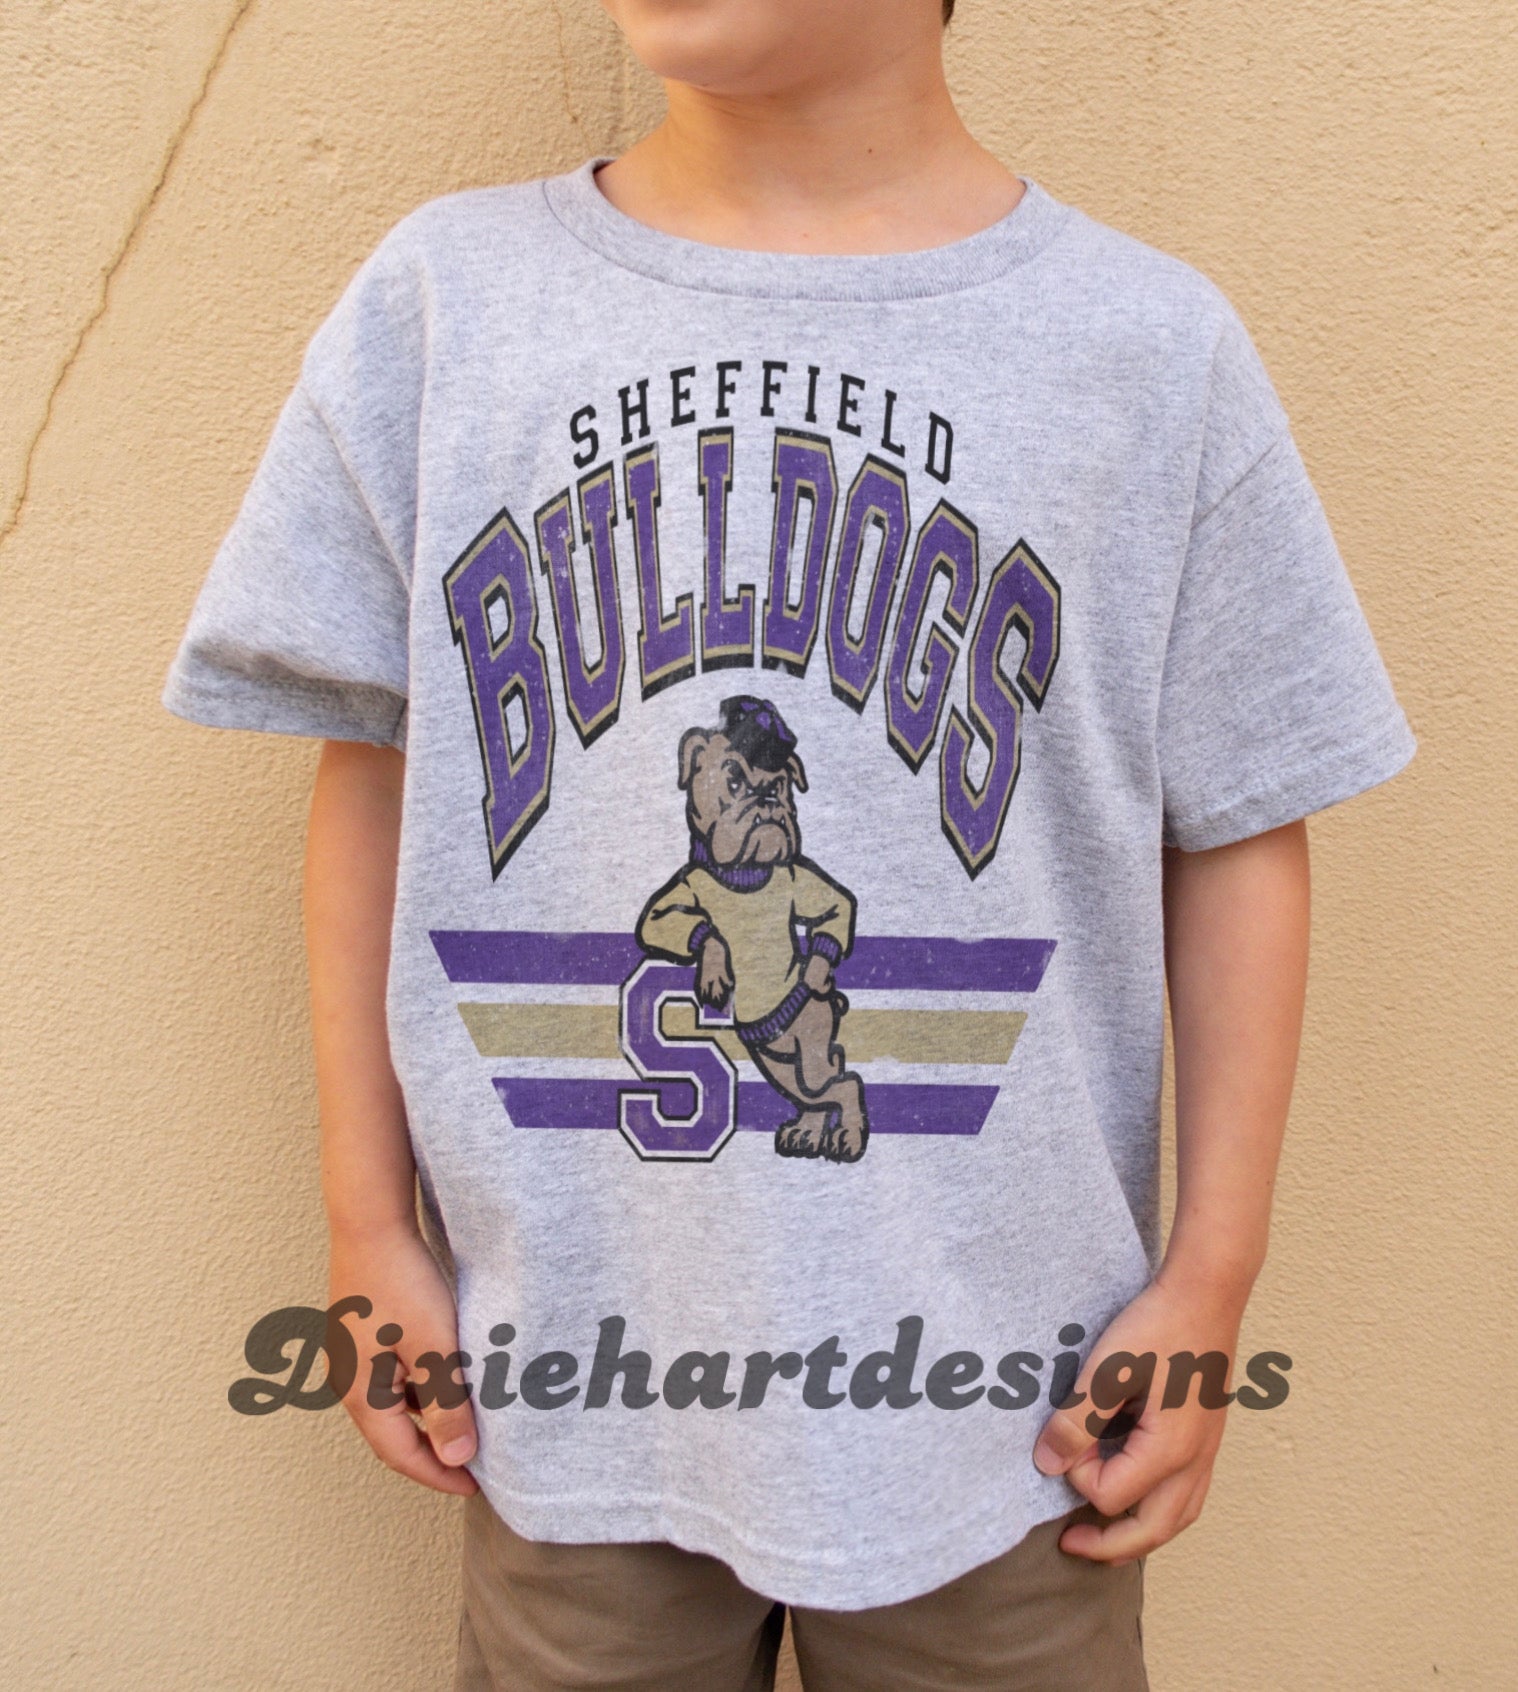 Sheffield Bulldogs Tee